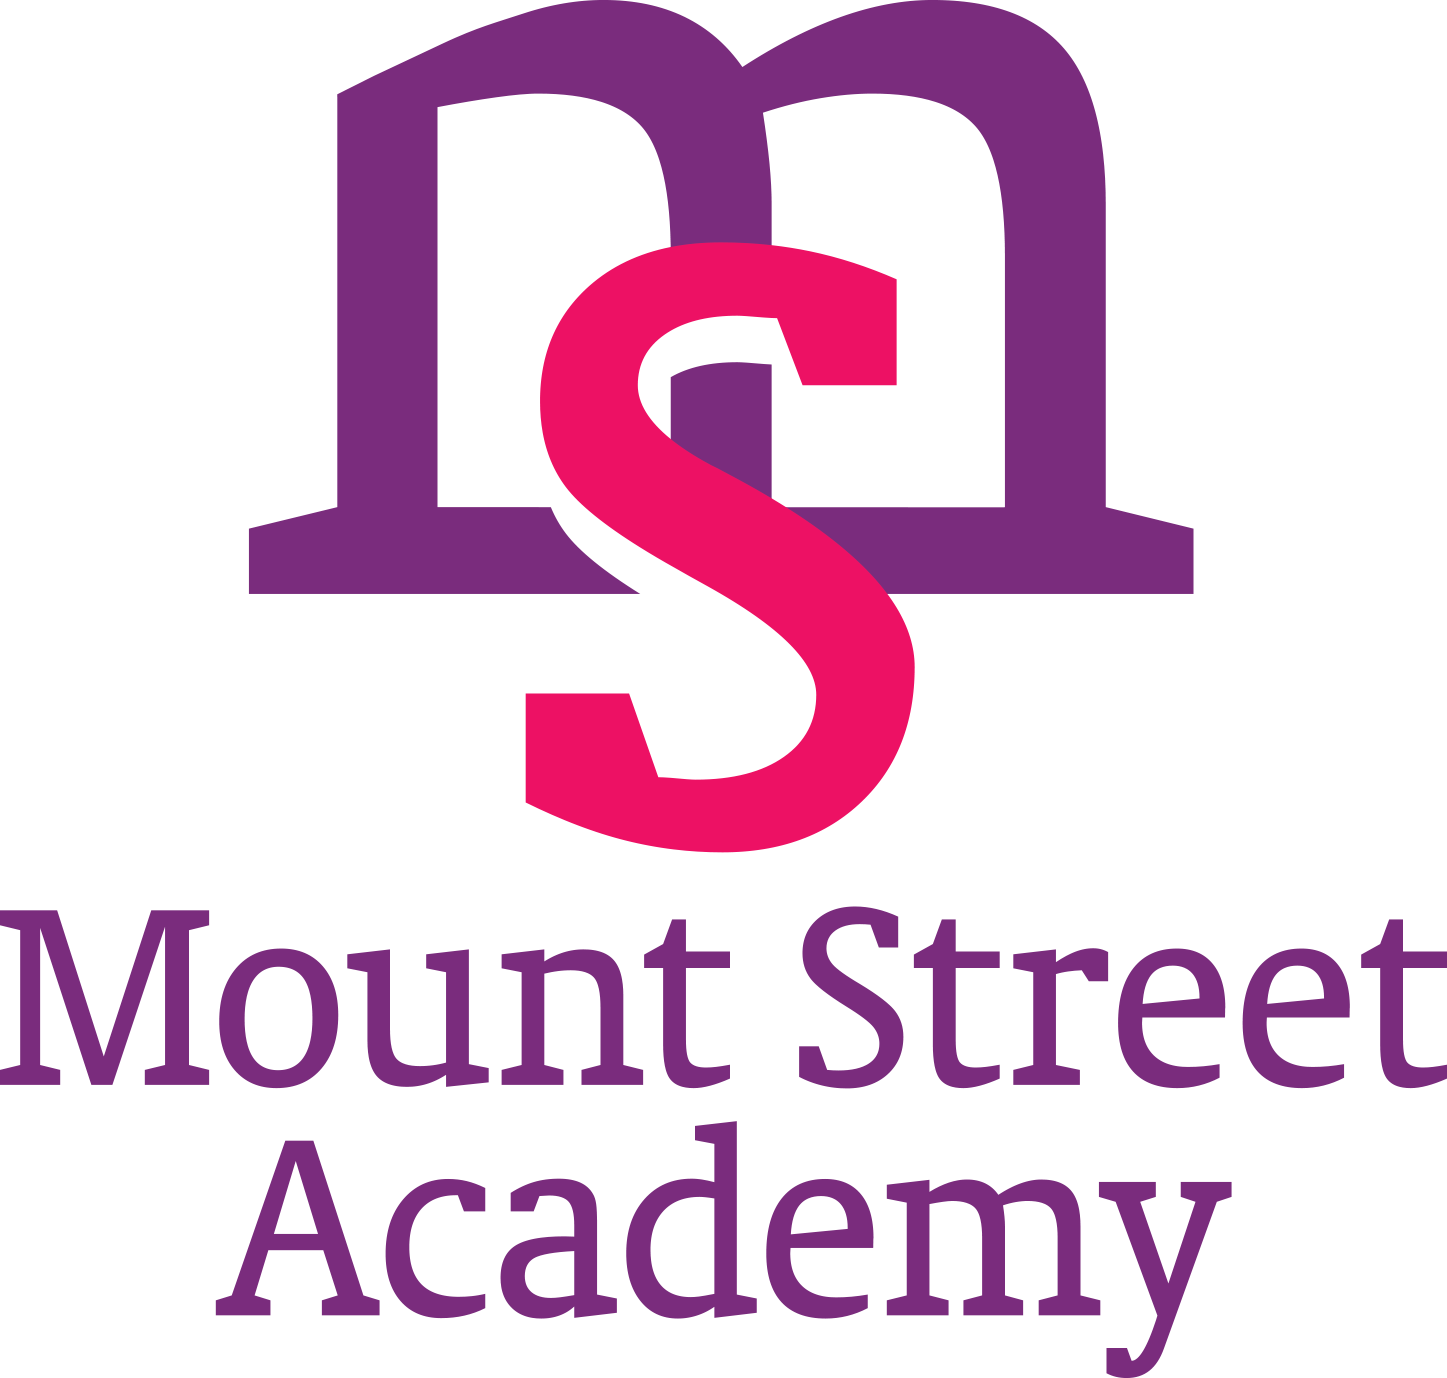 Mount Street Academy logo